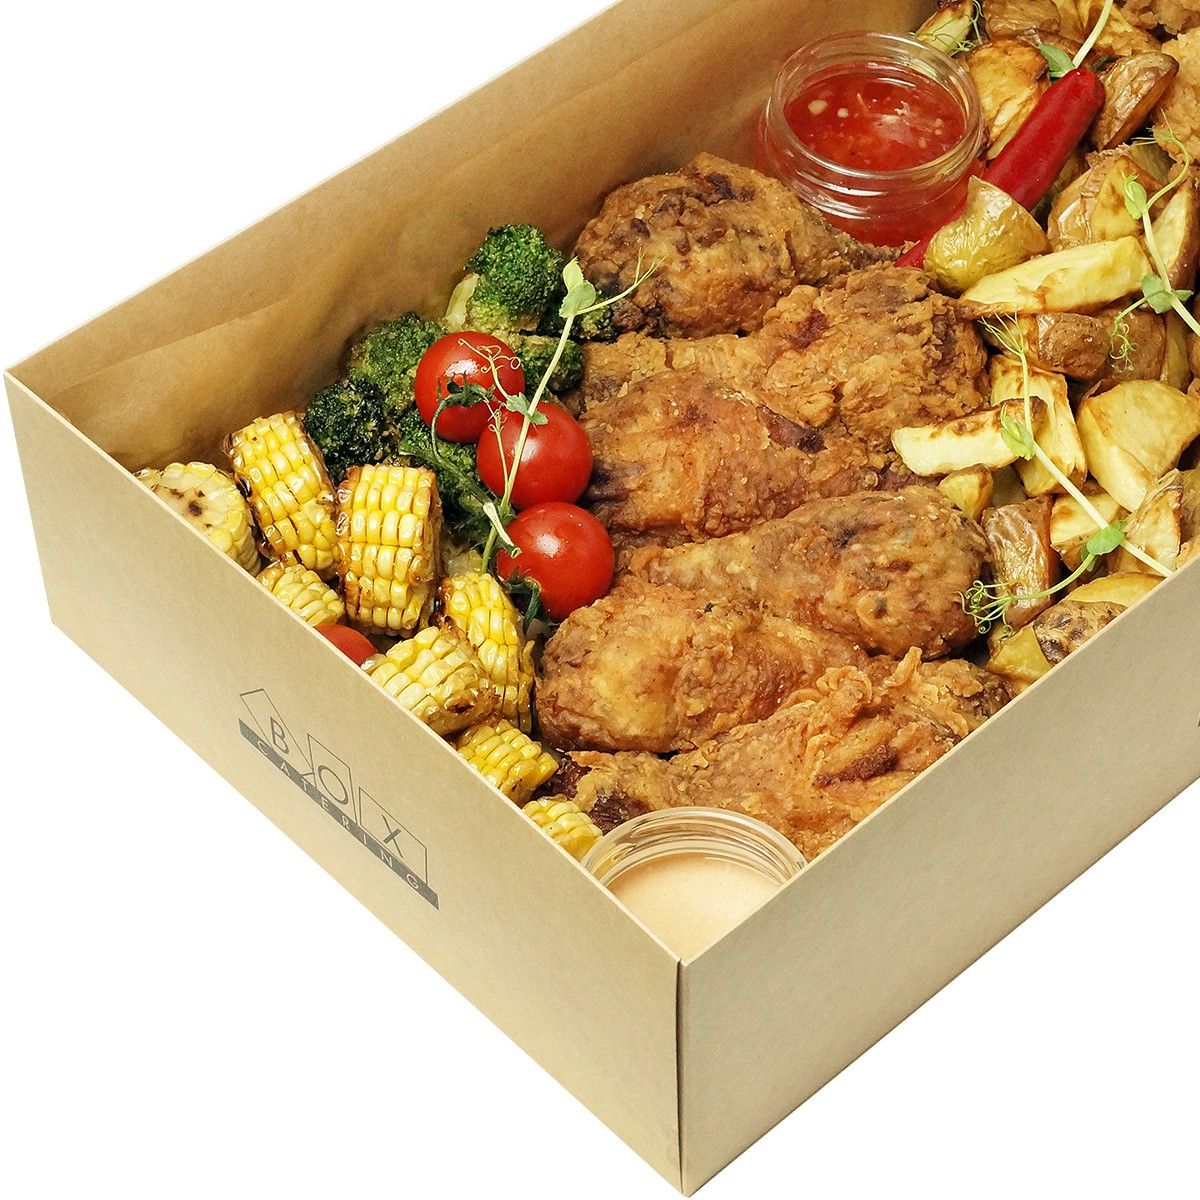 Fried chicken big box